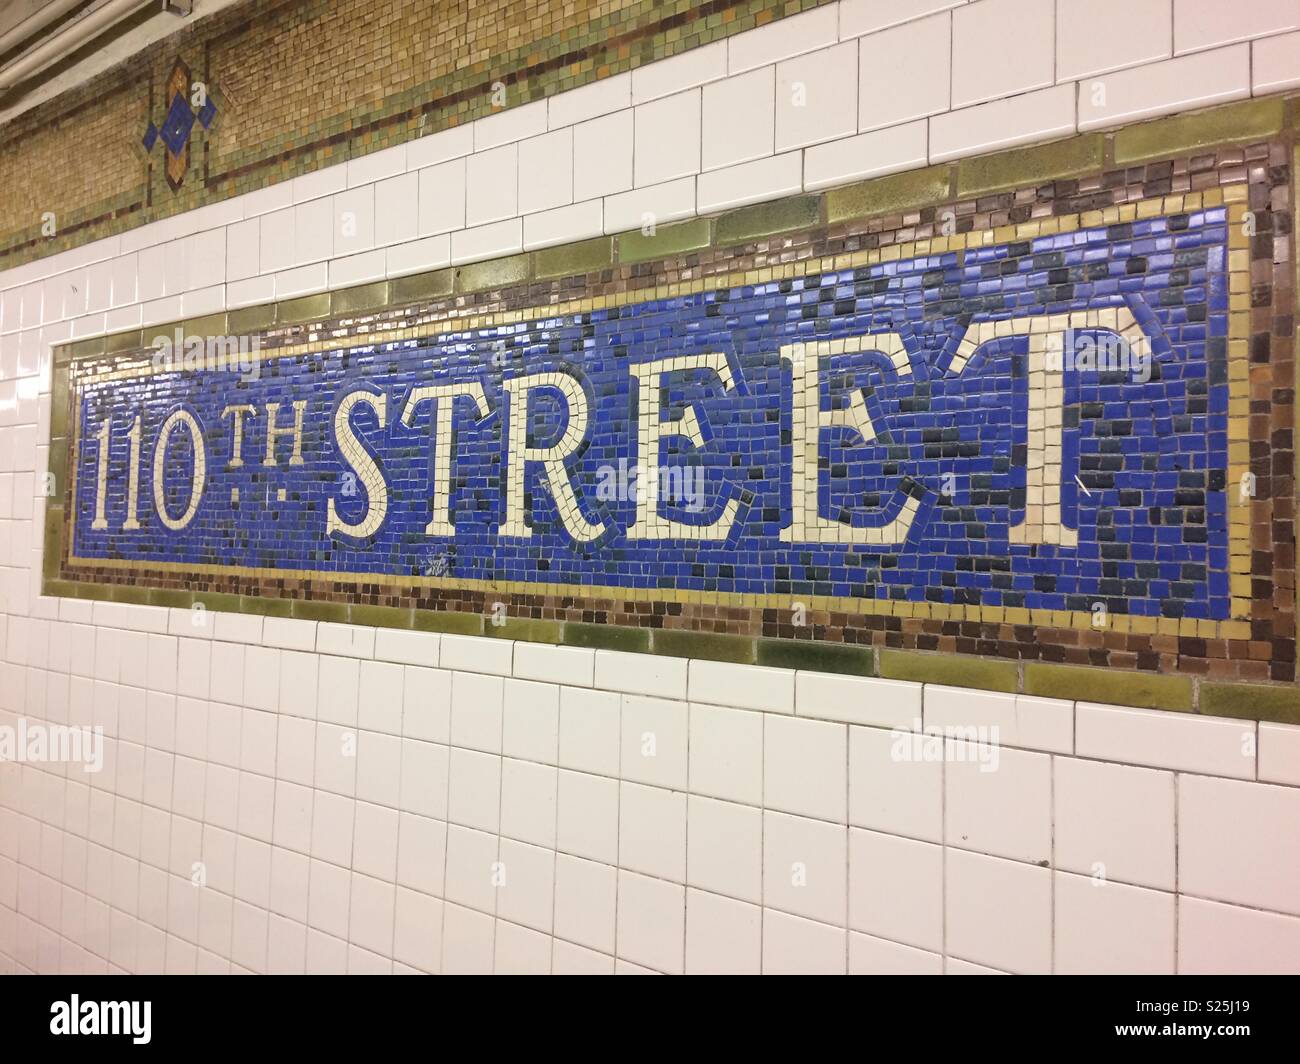 110th Street Subway sign Stock Photo Alamy